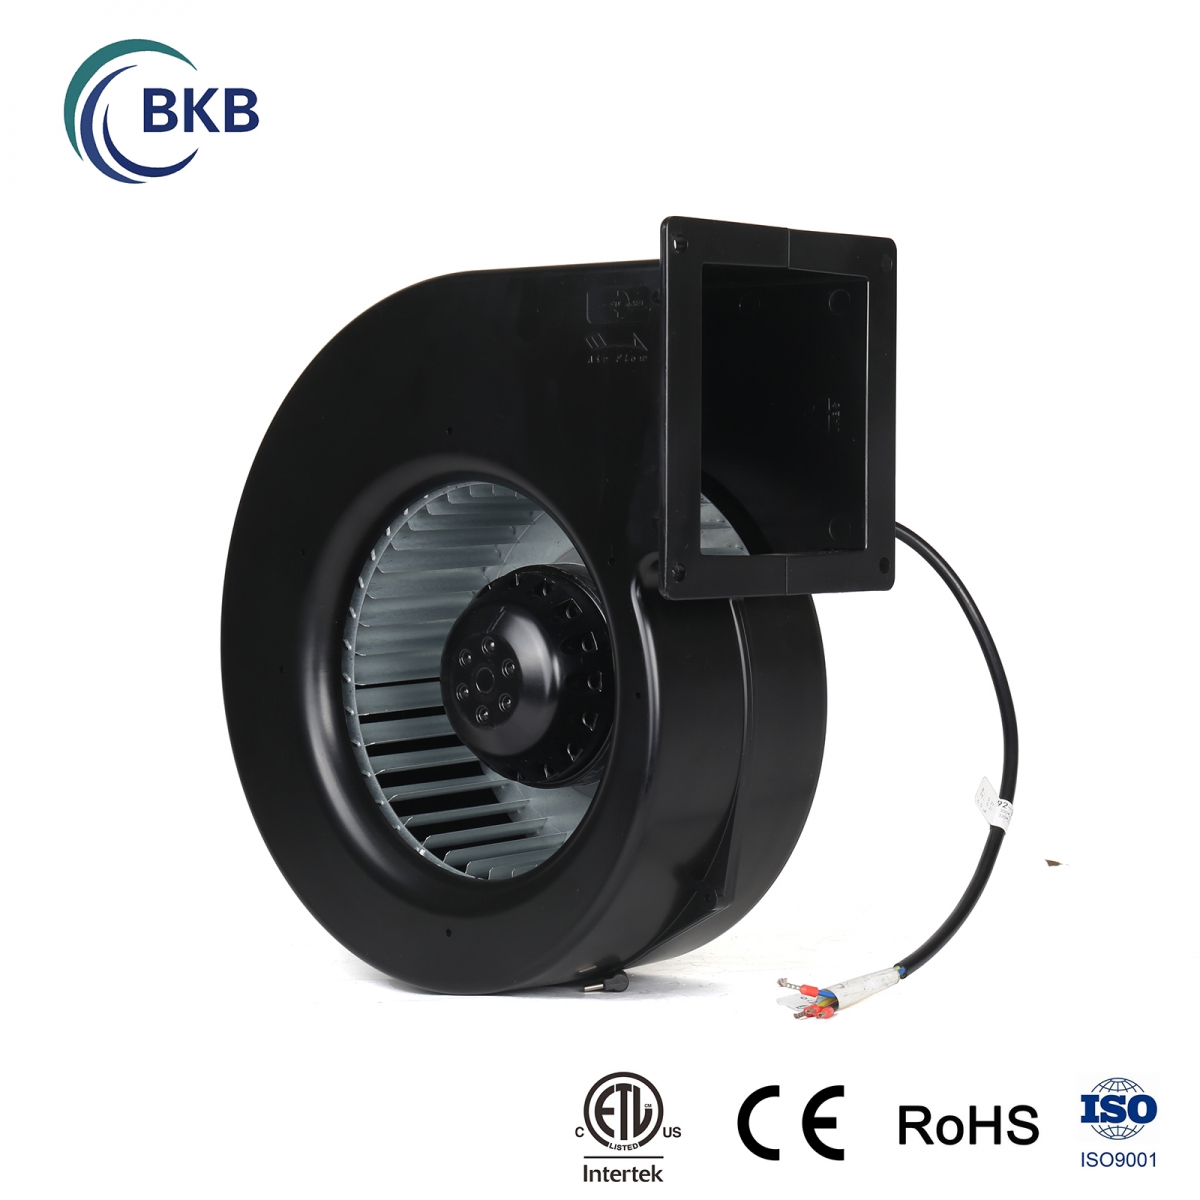 Definición de ventilador centrífugo-SUNLIGHT BLOWER,Centrifugal Fans, Inline Fans,Motors,Backward curved centrifugal fans ,Forward curved centrifugal fans ,inlet fans, EC fans